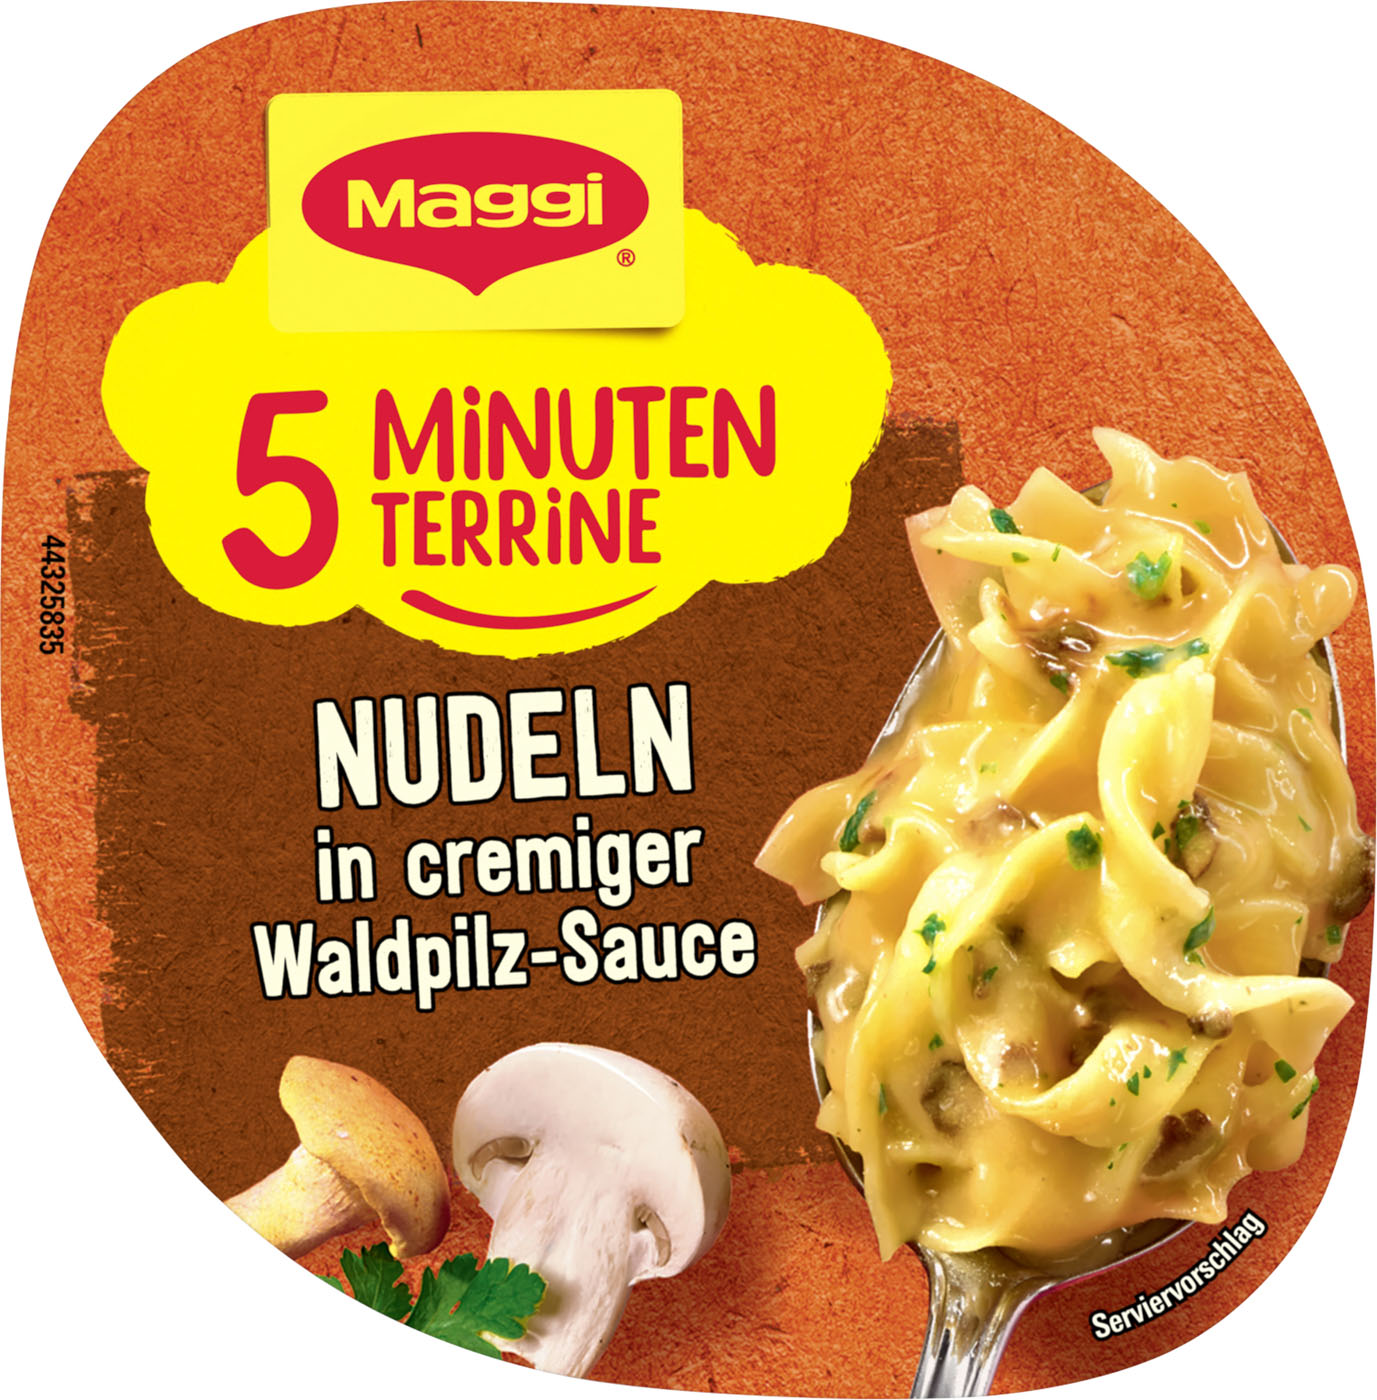 Maggi 5 Min Terrine Nudeln in Waldpilzrahm-Sauce 56G